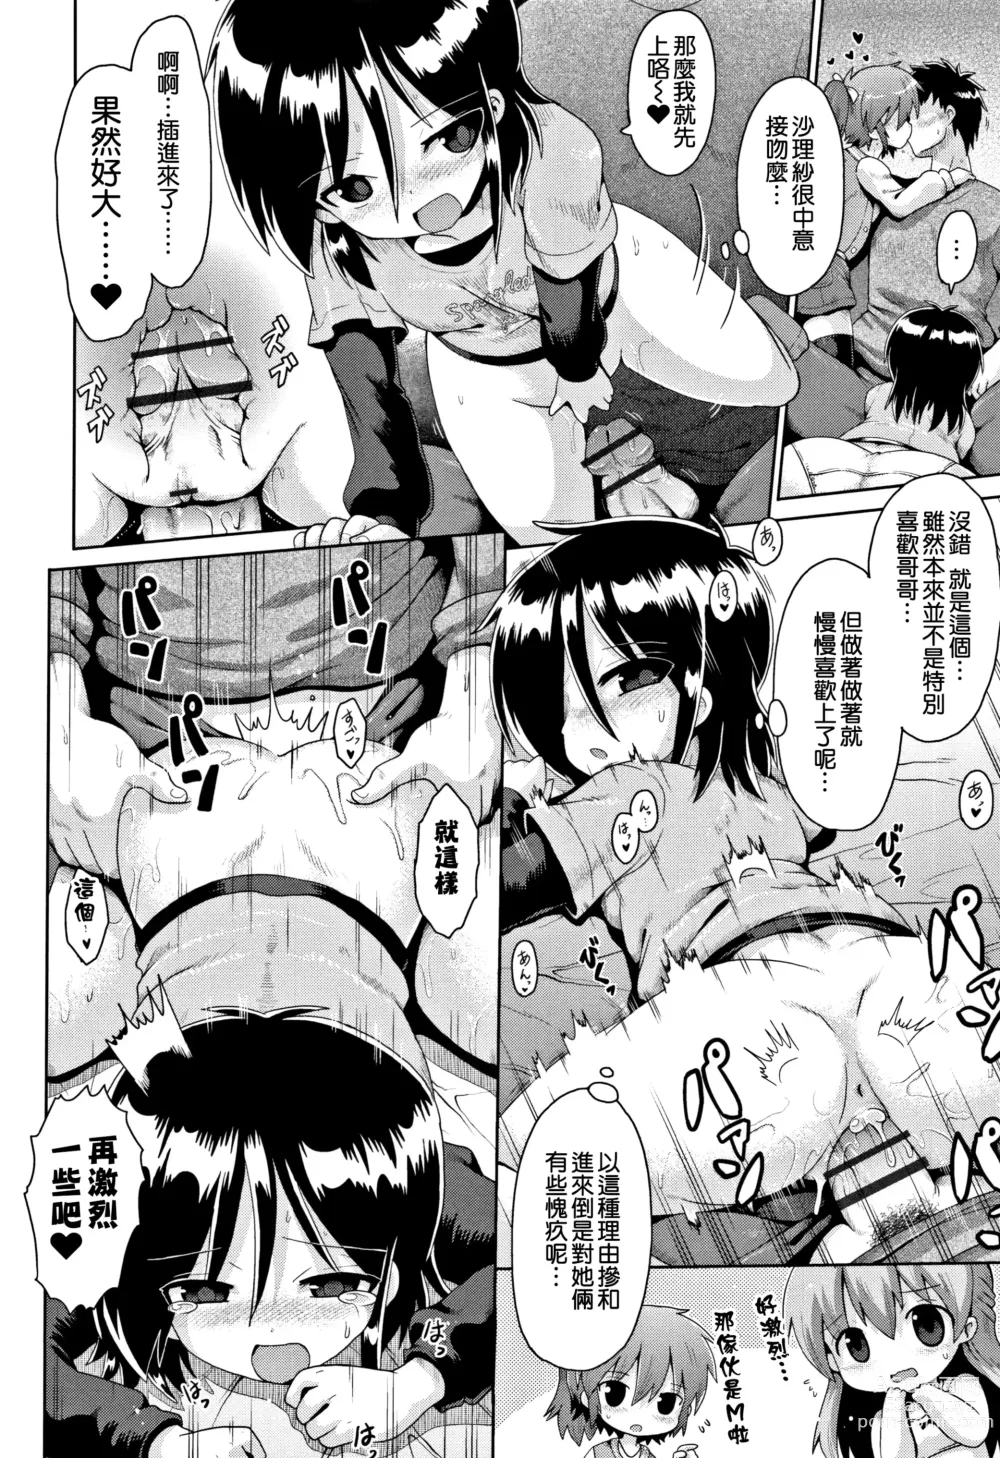 Page 75 of manga Trident 1 + 2 + 3